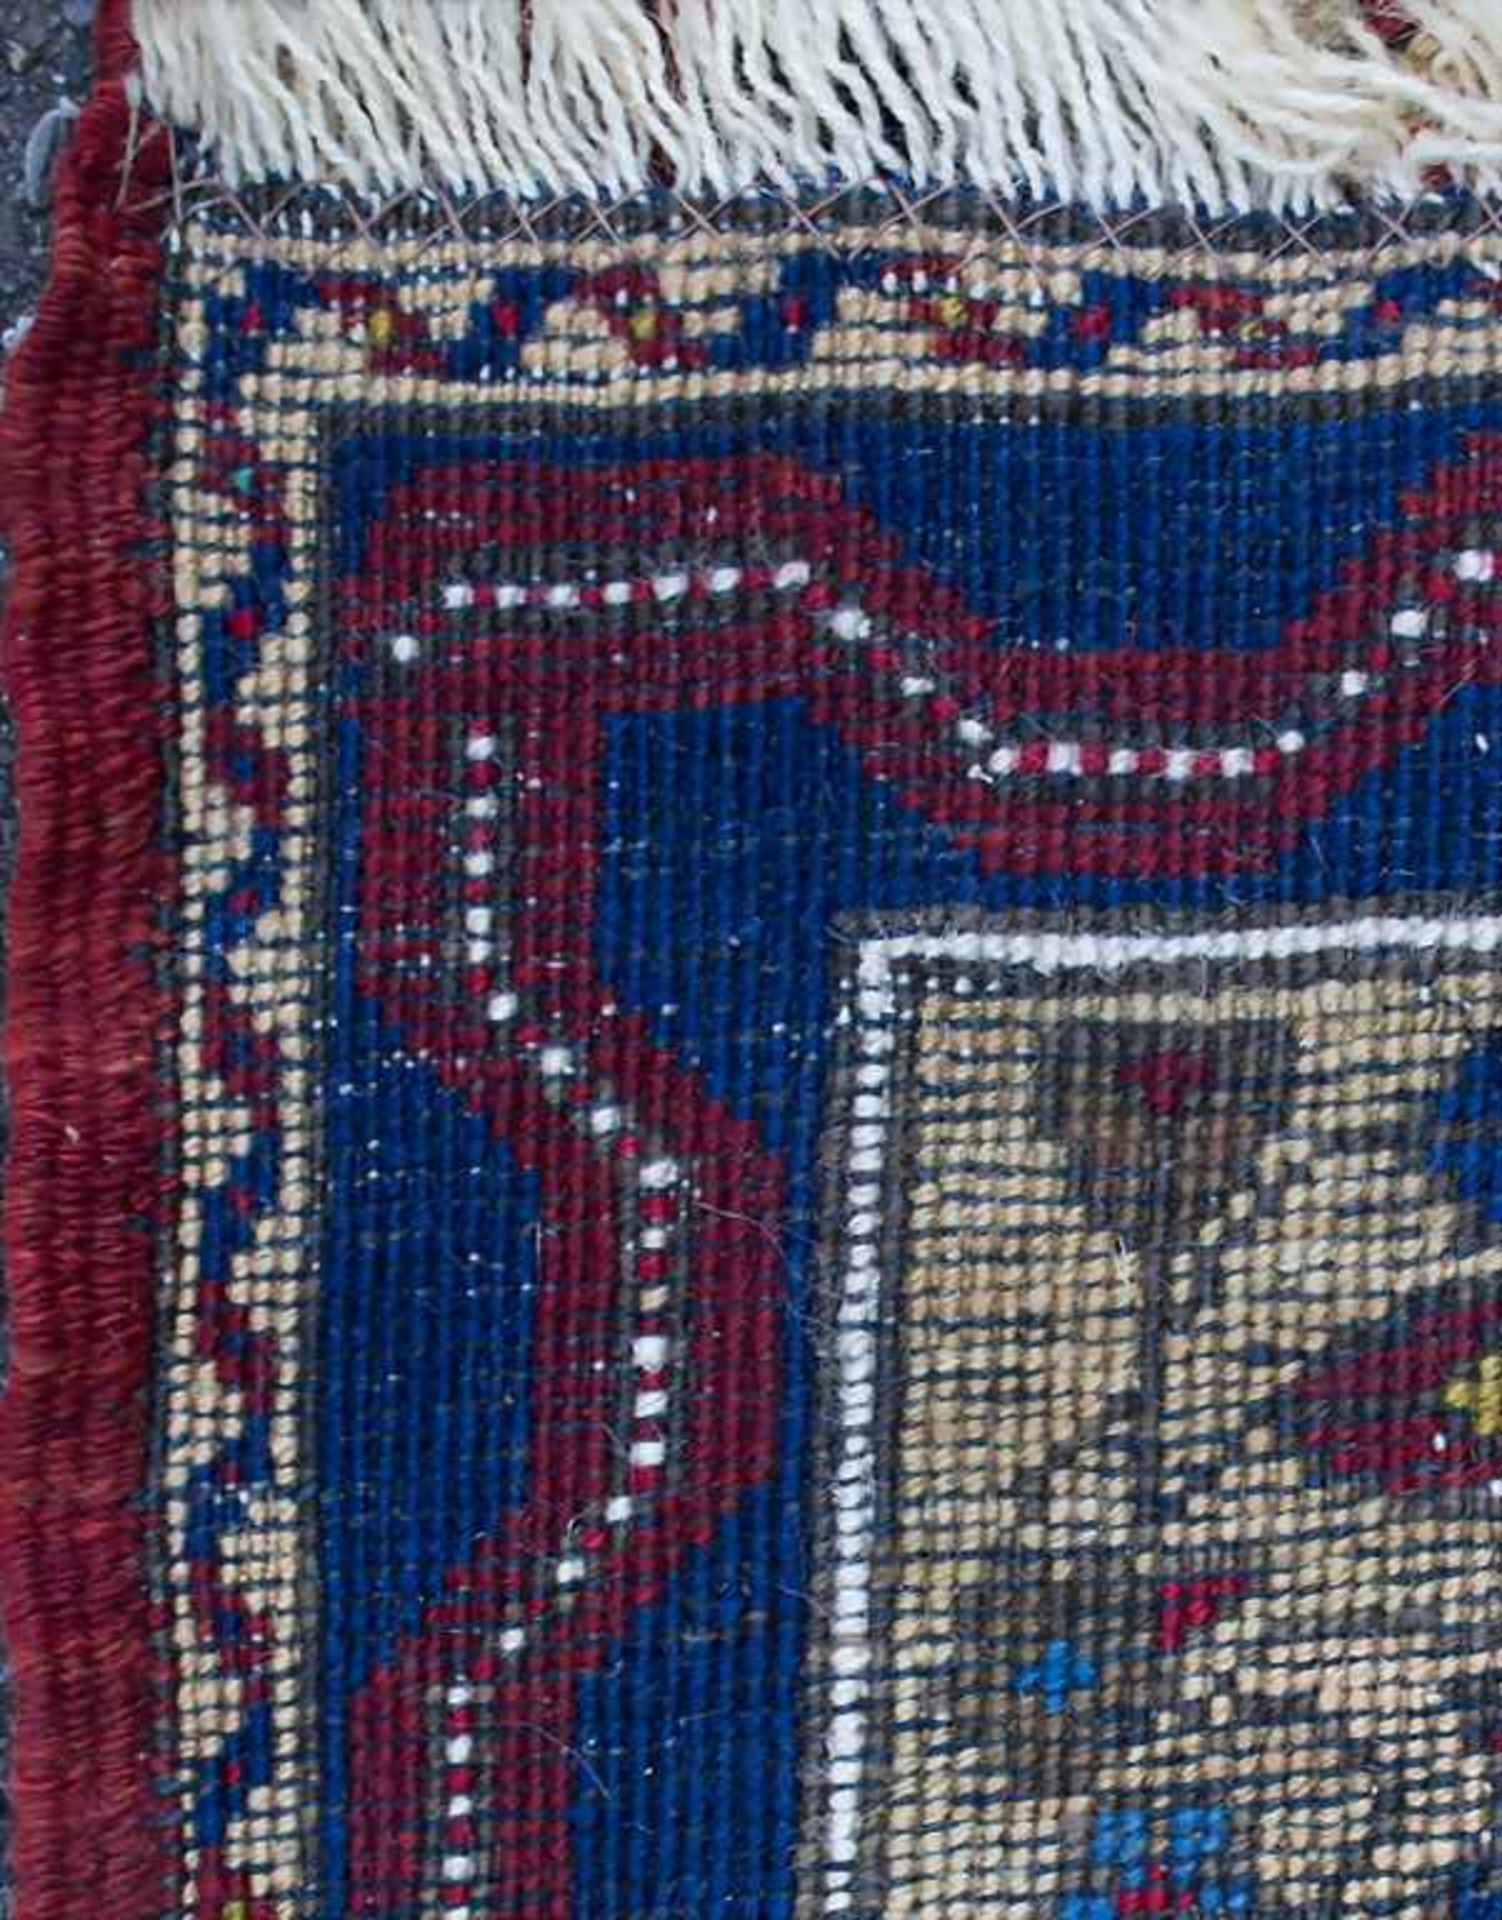 Orientteppich / An oriental carpetMaterial: Wolle auf Wolle, Maße: 248 x 155 cm, Zustand: gut , - Image 7 of 7